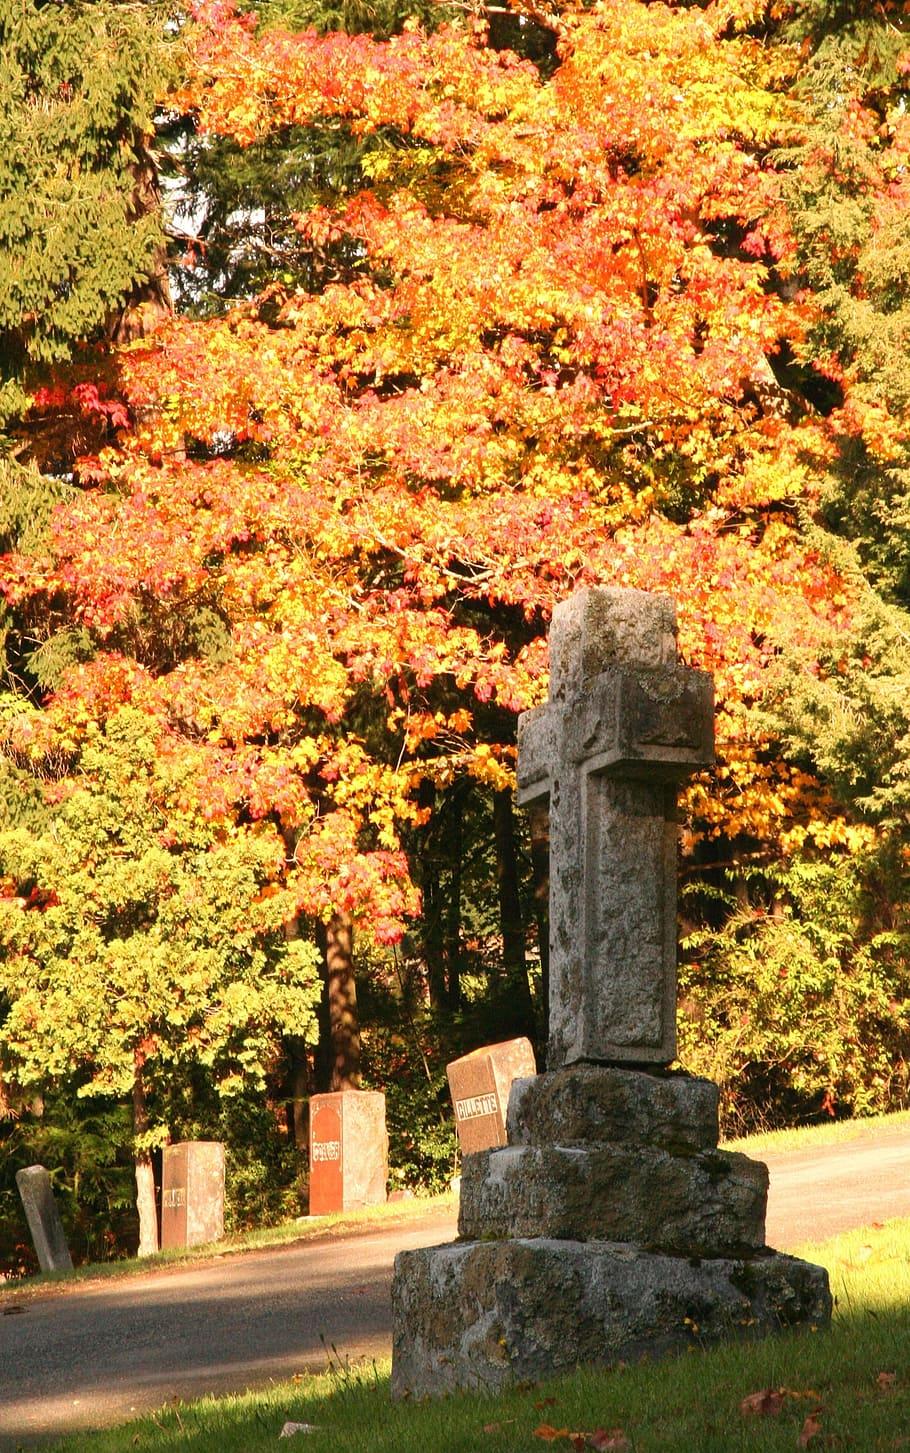 HD wallpaper: fall leaves, cemetery, season, autumn, halloween, orange, gravestone